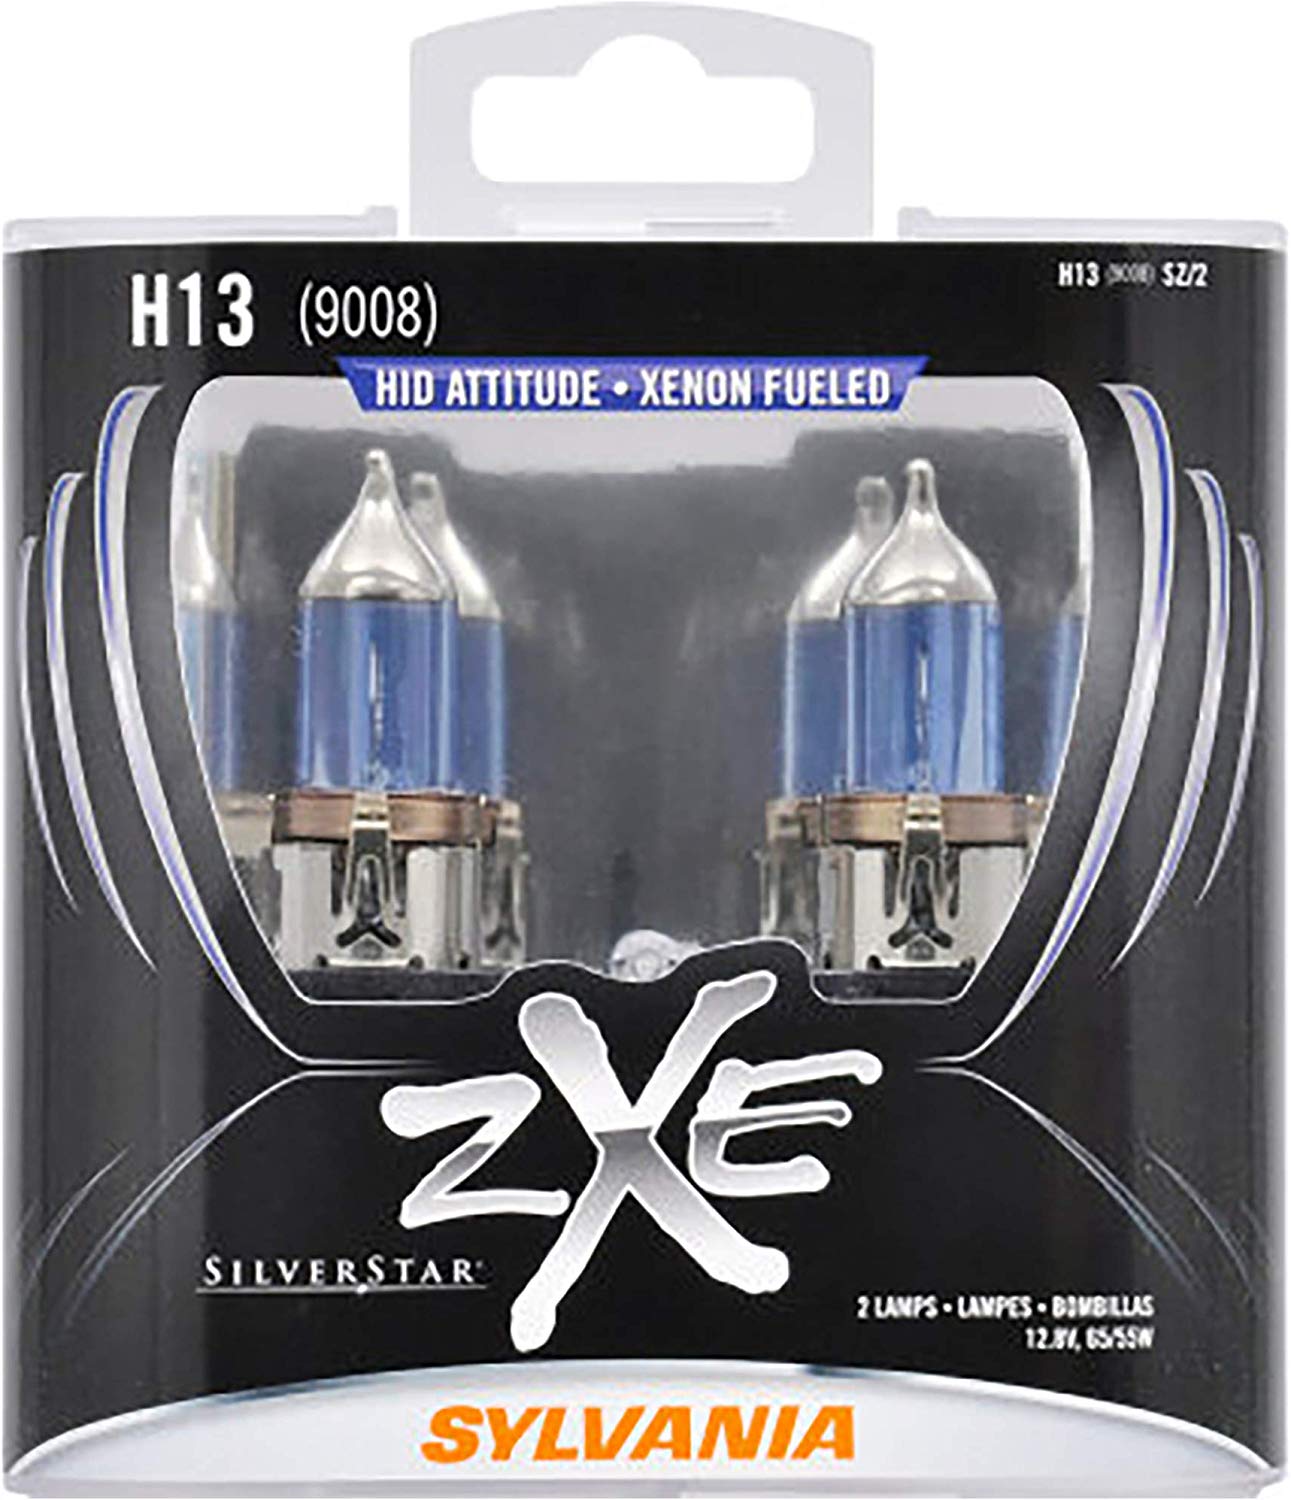 SYLVANIA - H13 (9008) SilverStar zXe High Performance Halogen Headlight Bulb - Bright White Light Output, HID Attitude, Xenon Fueled Technology (Contains 2 Bulbs)